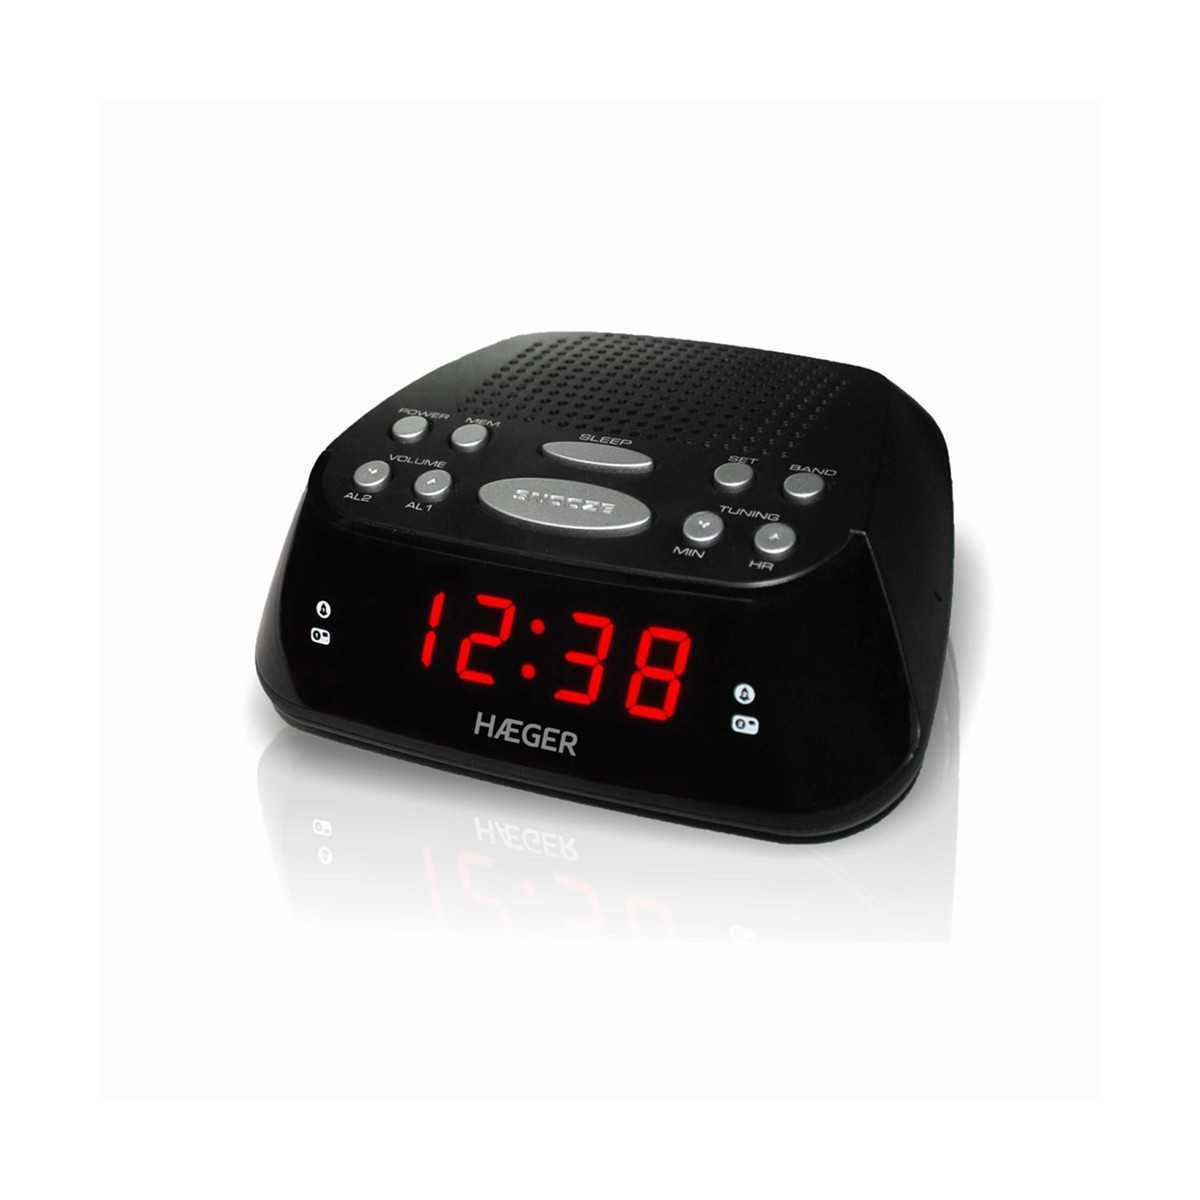 Digital Alarm Clock Radio SNOOZER - Snooze Control